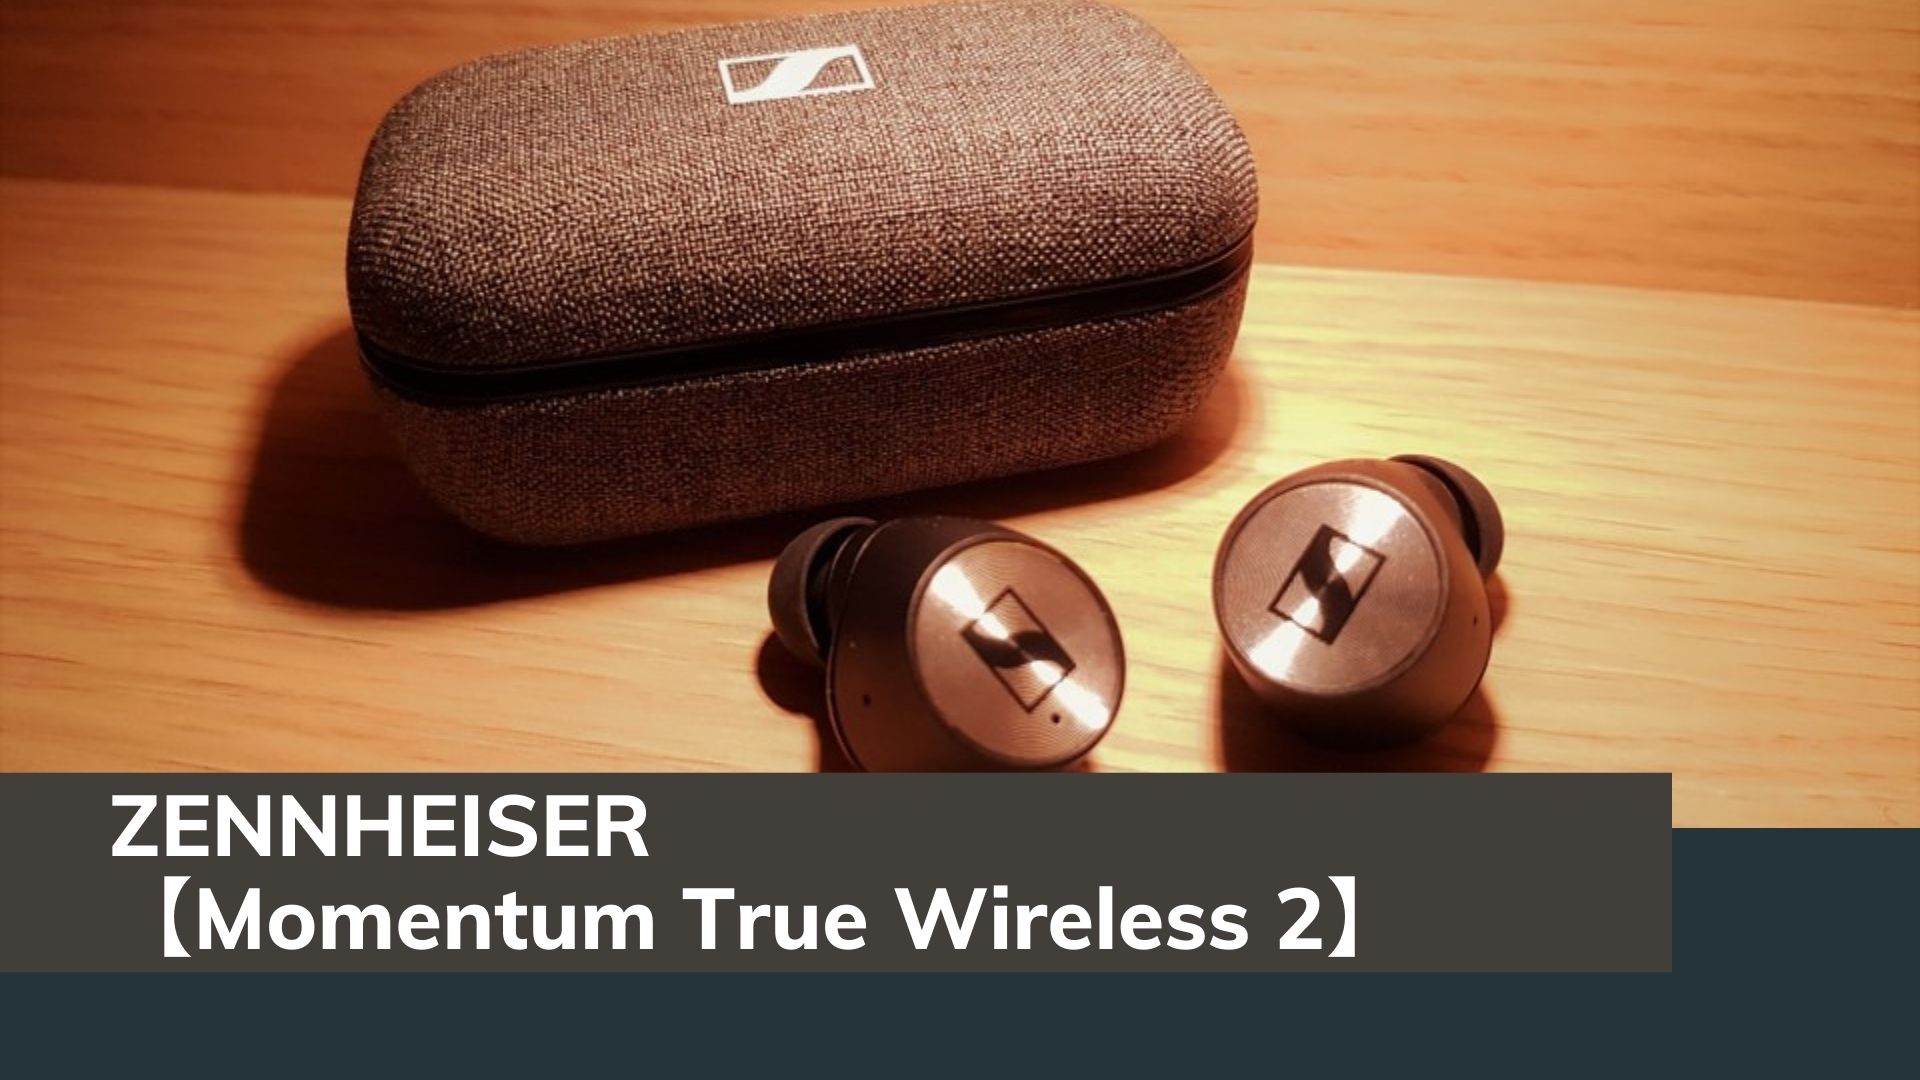 Momentum True Wireless 2 音質向上 イコライザーのおすすめ設定方法など マネーリビングlabo